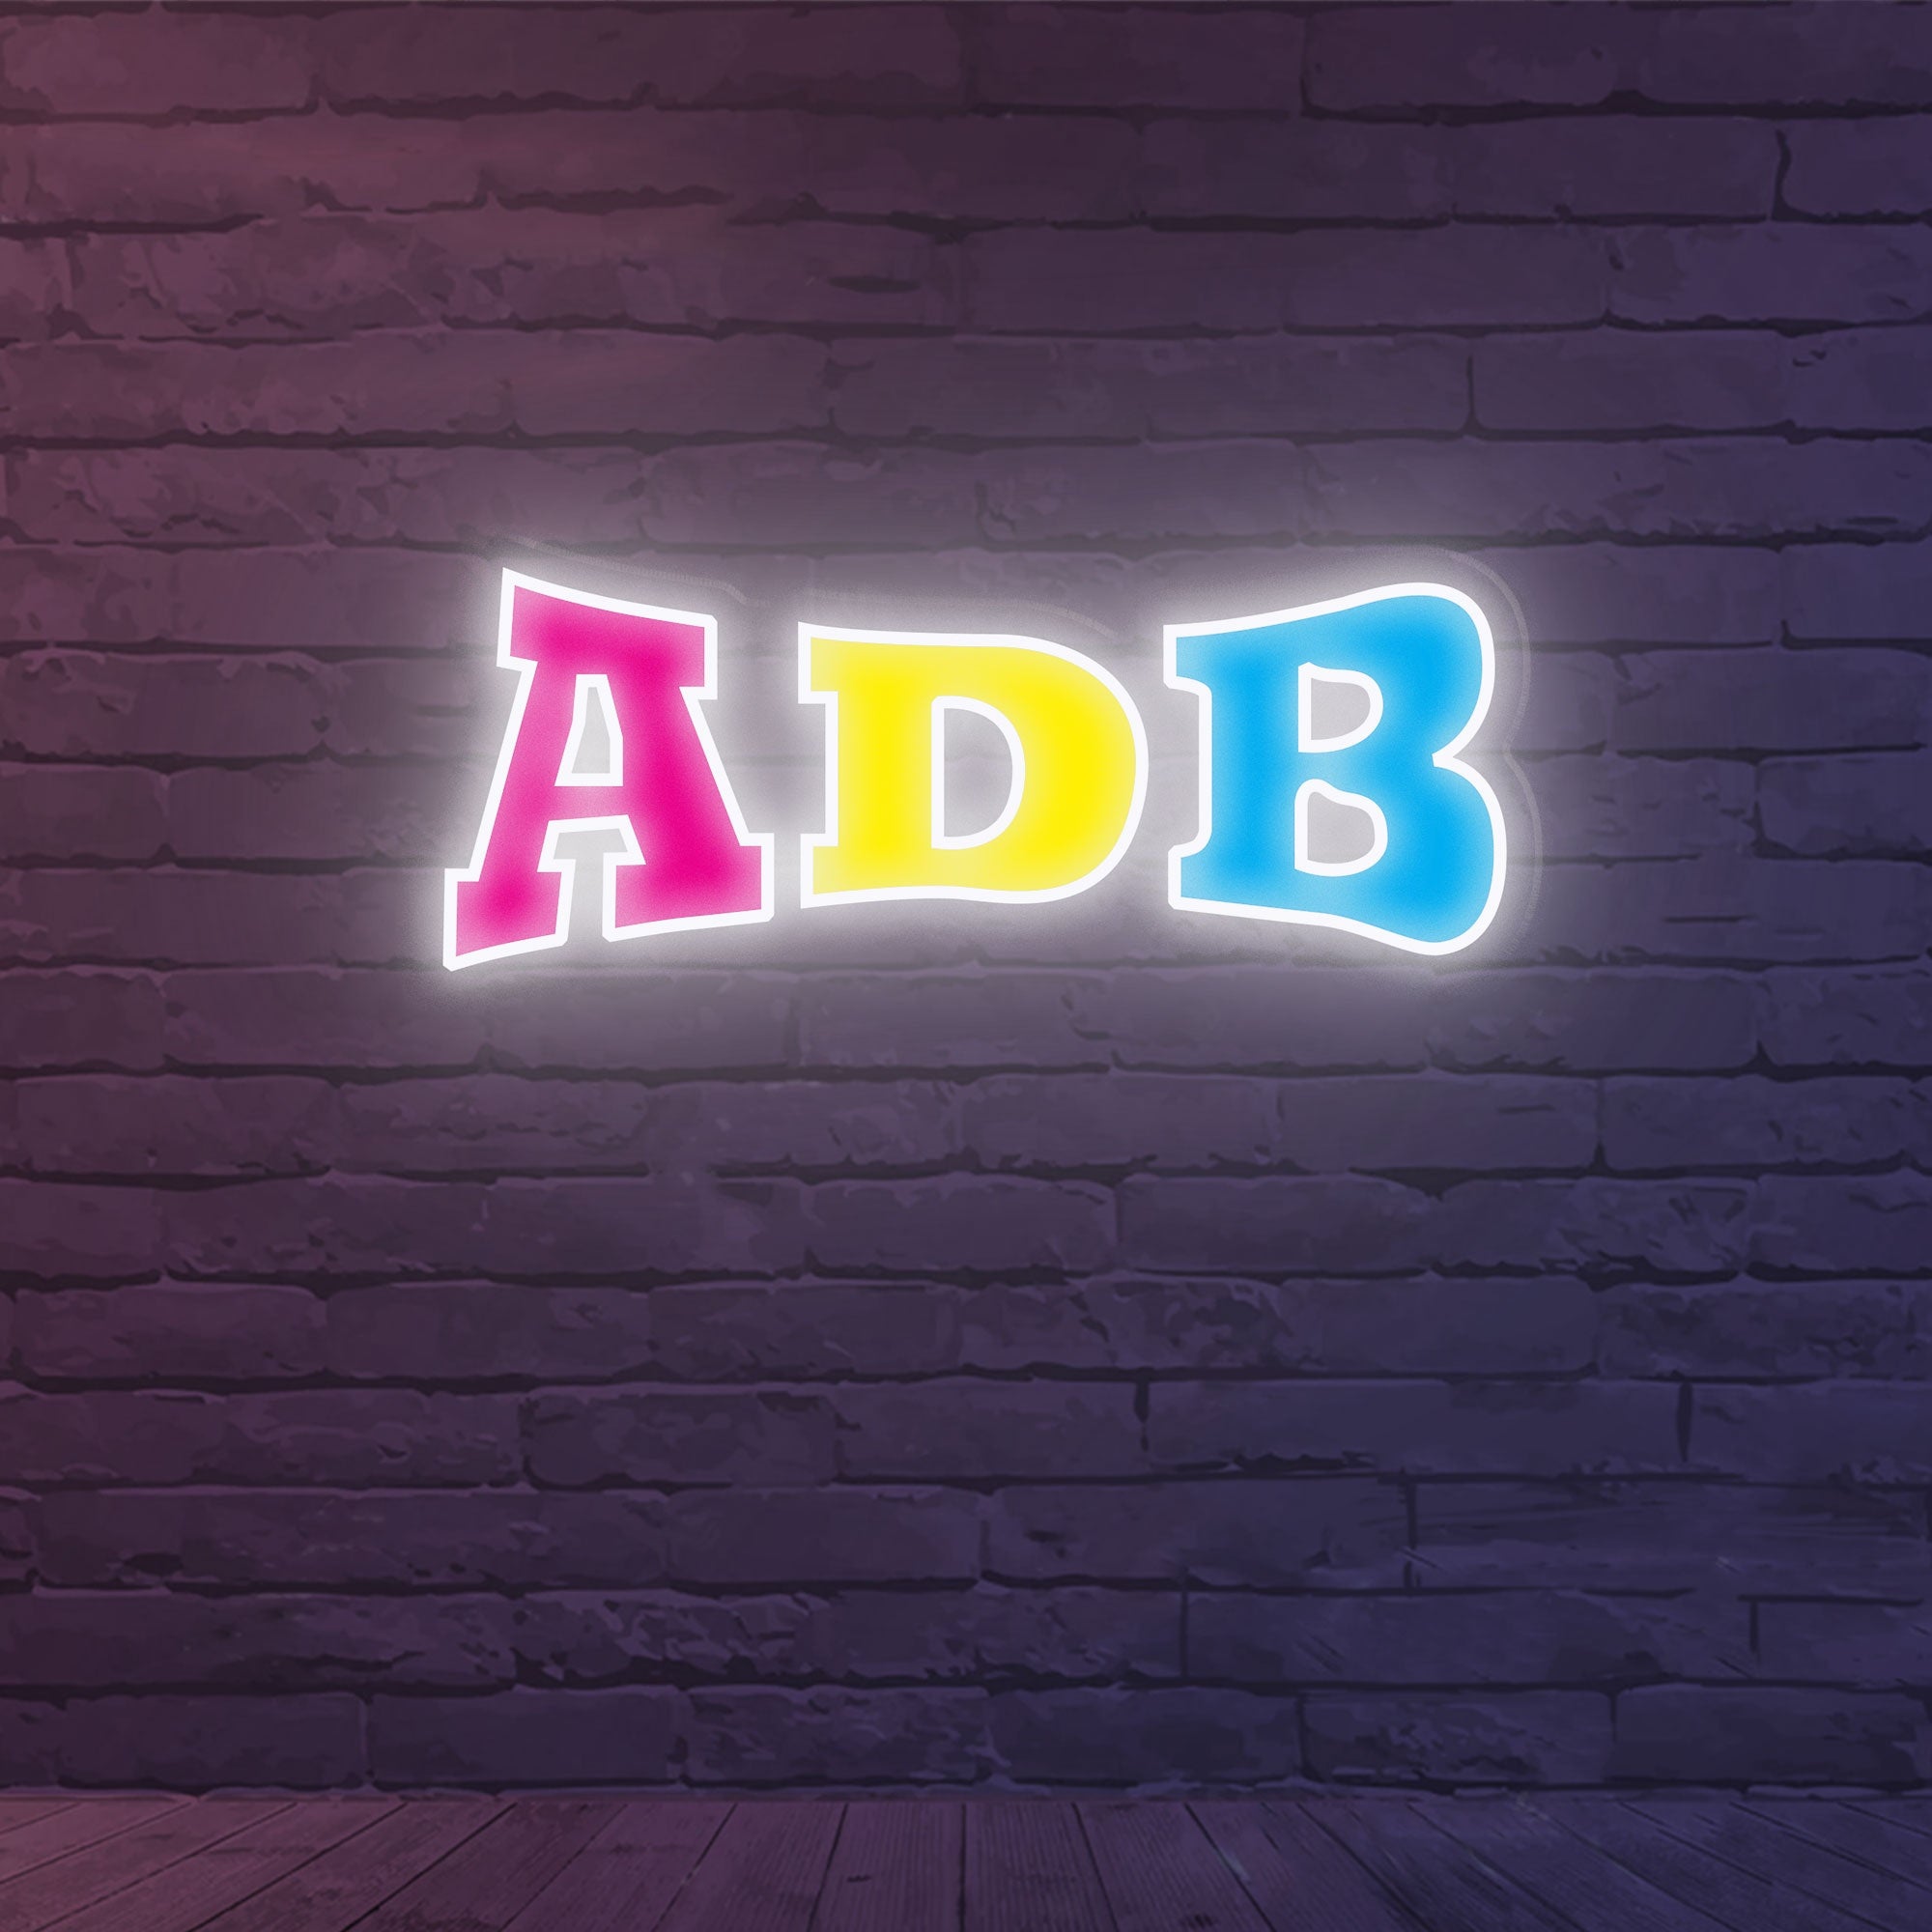 Custom Neon 'ADB' [+ 2 FREE Bonus Items] ~$150 OFF